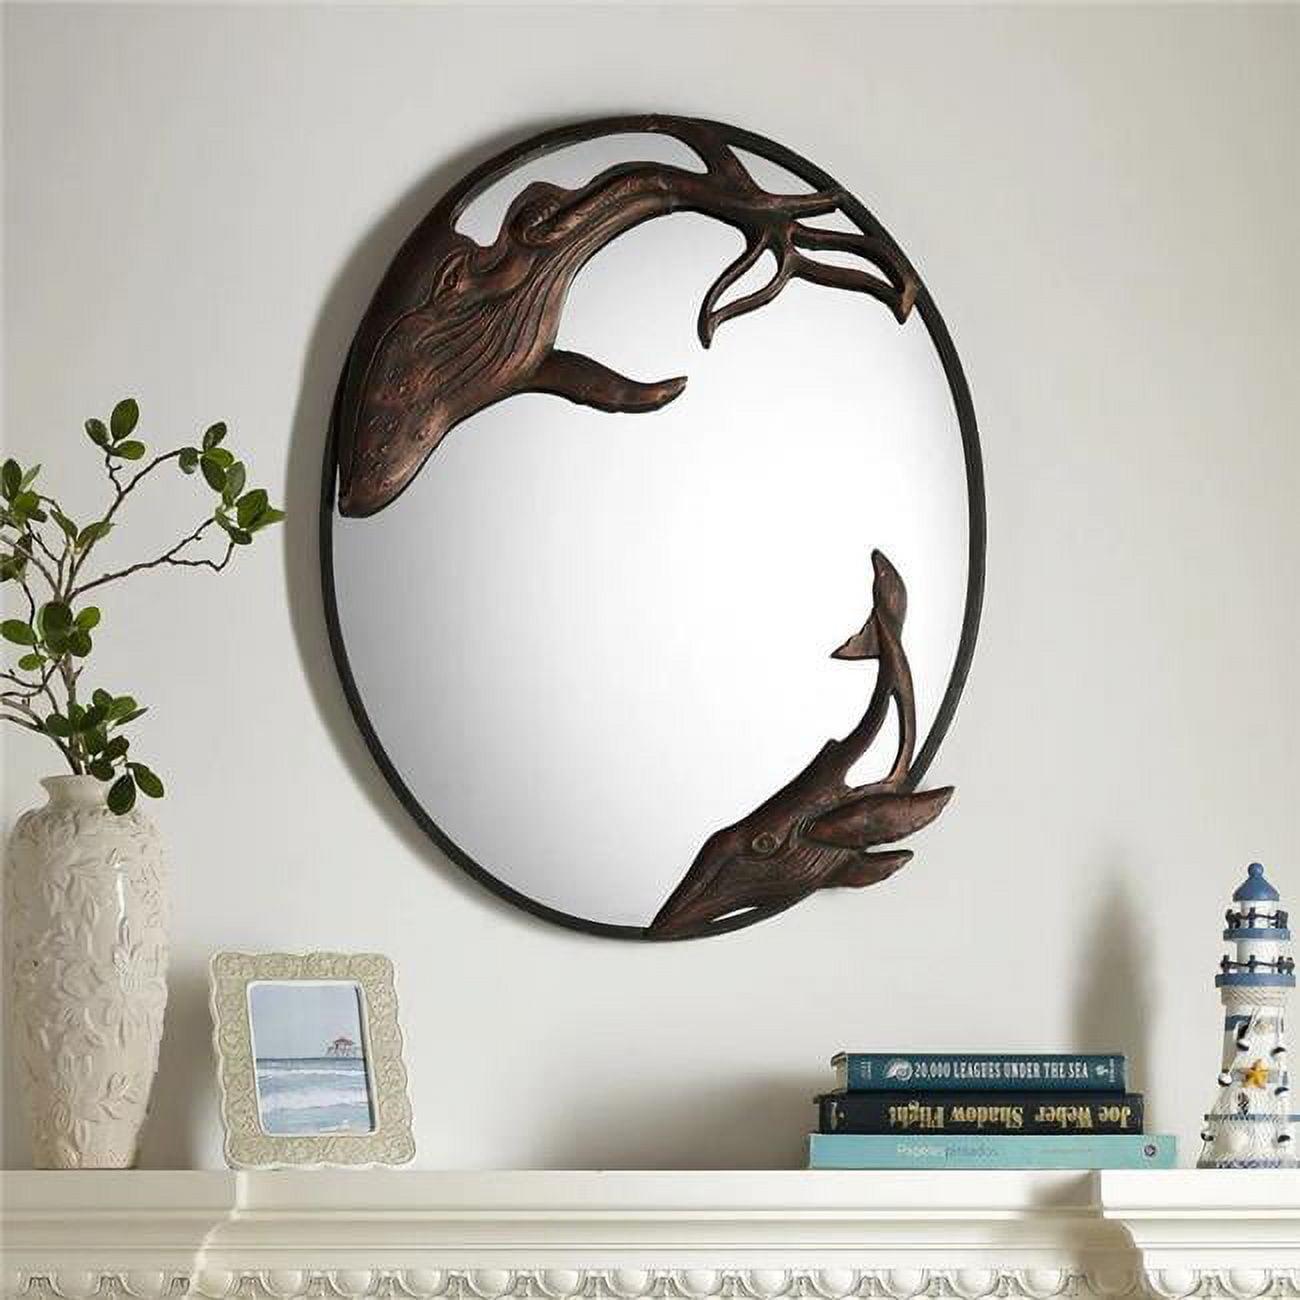 Coastal Bronze Whale Oval Wall Mirror 26"L x 22"W